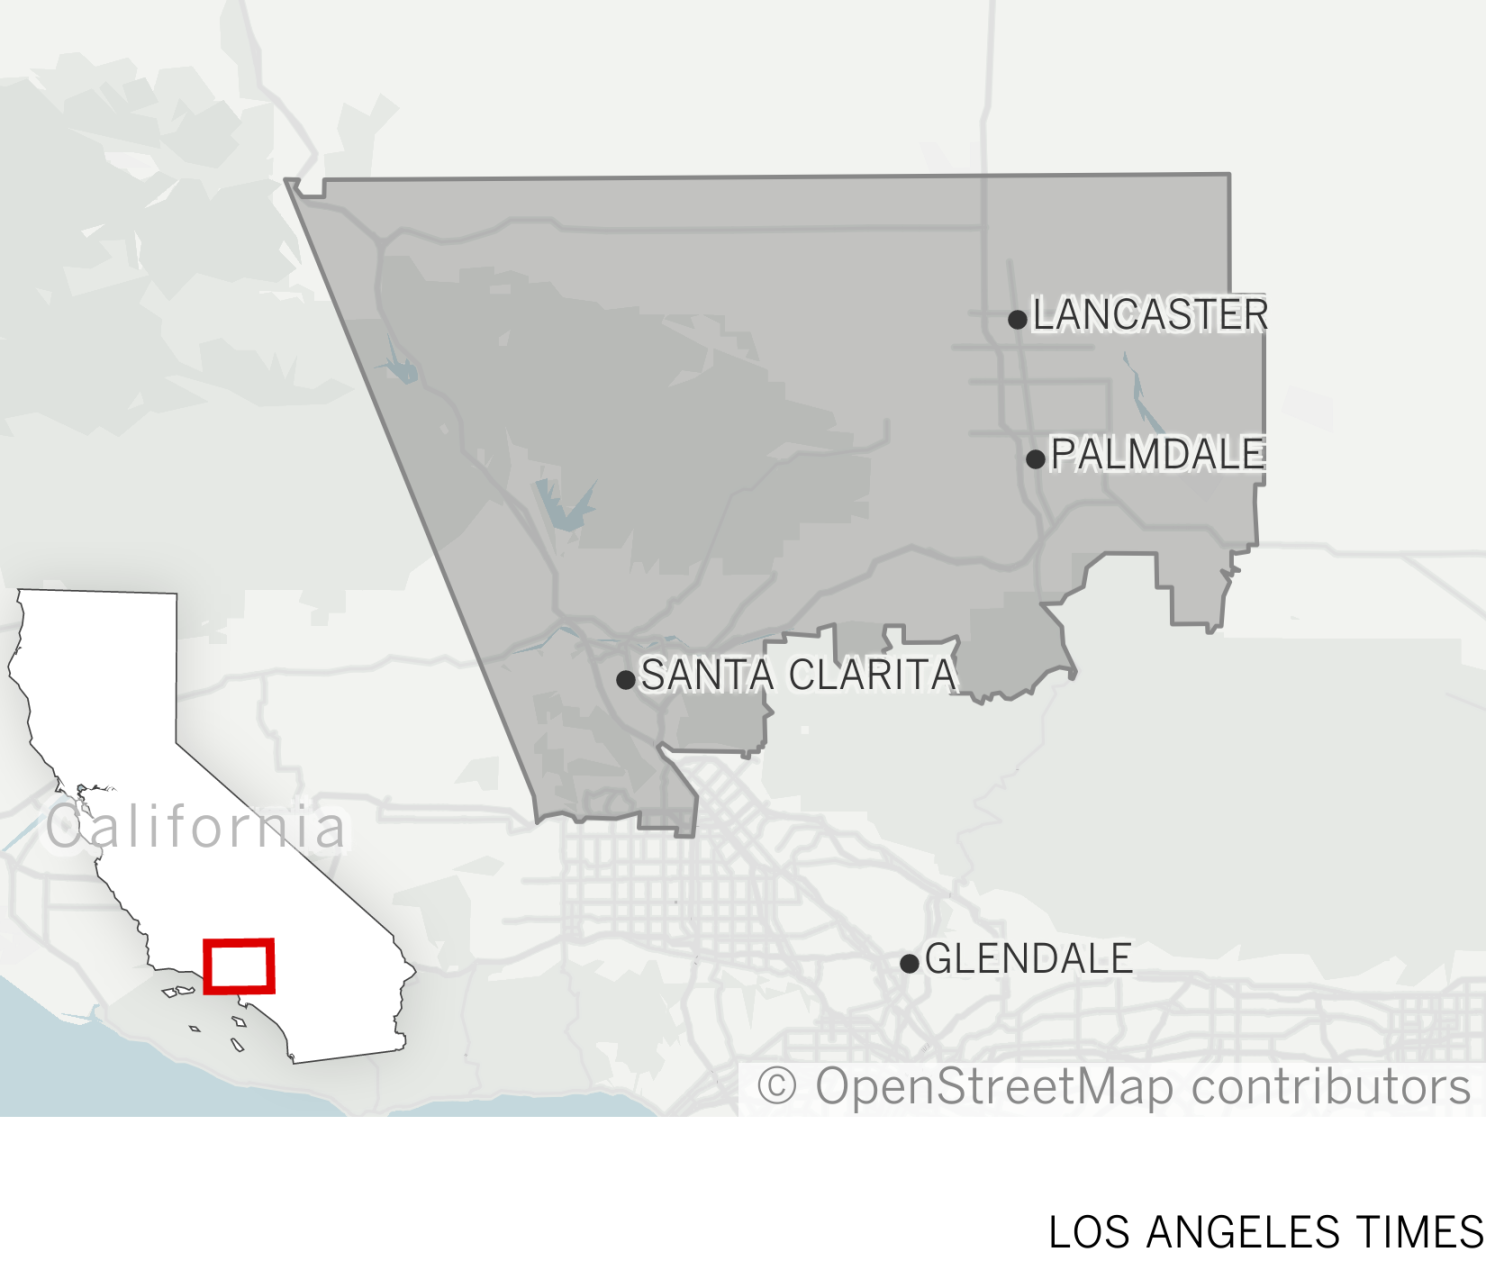 California Congressional District 47 guide: Porter vs. Baugh - Los Angeles  Times